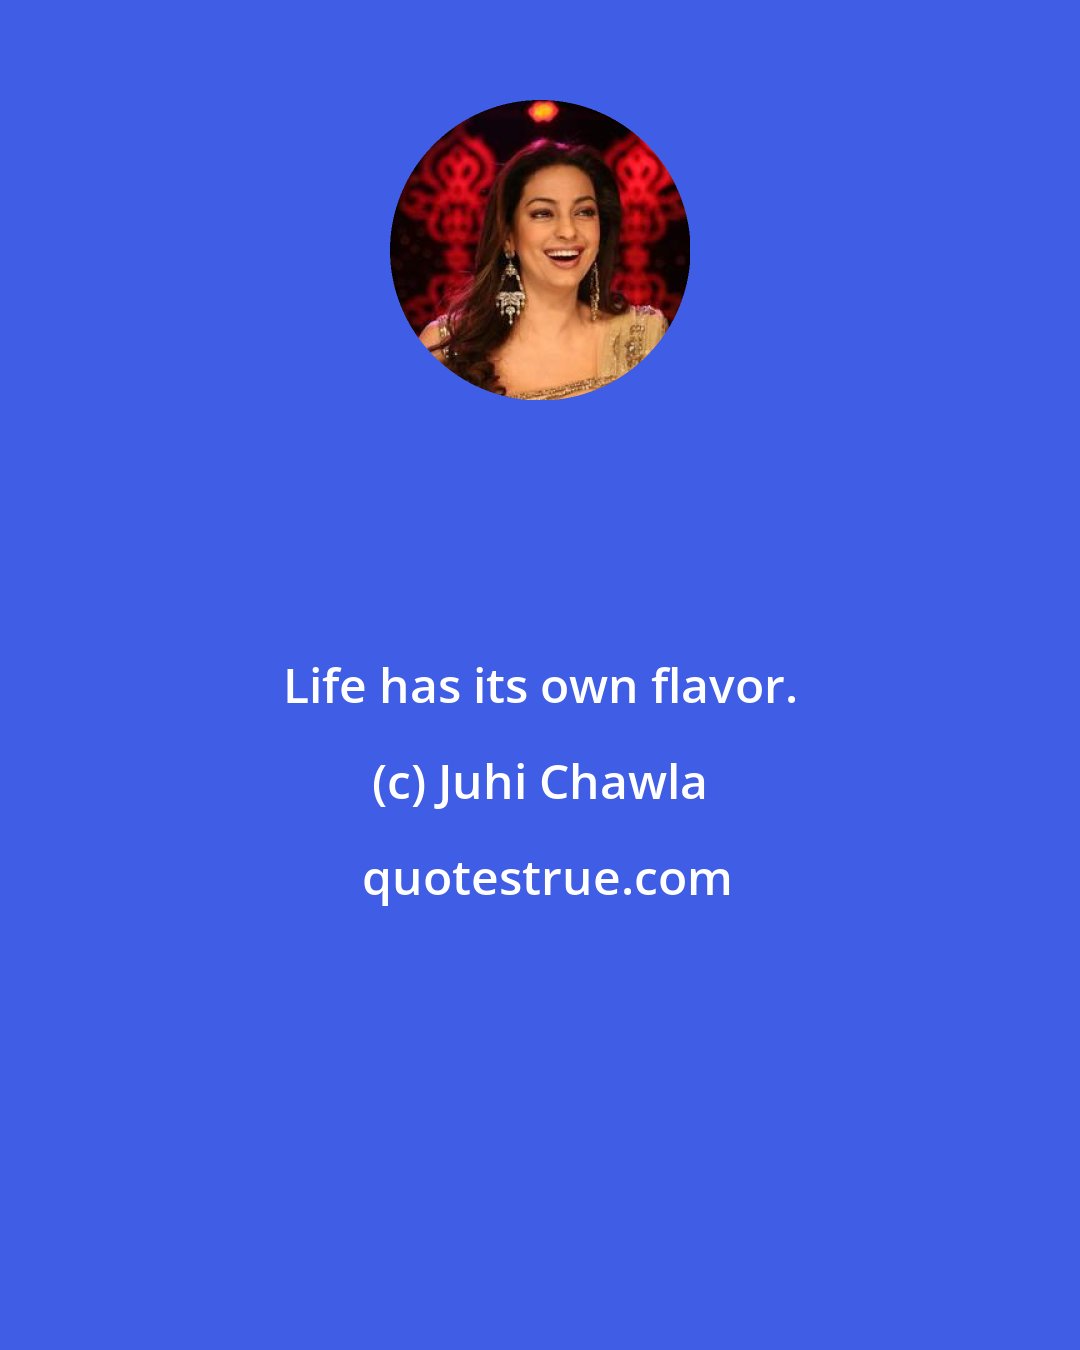 Juhi Chawla: Life has its own flavor.